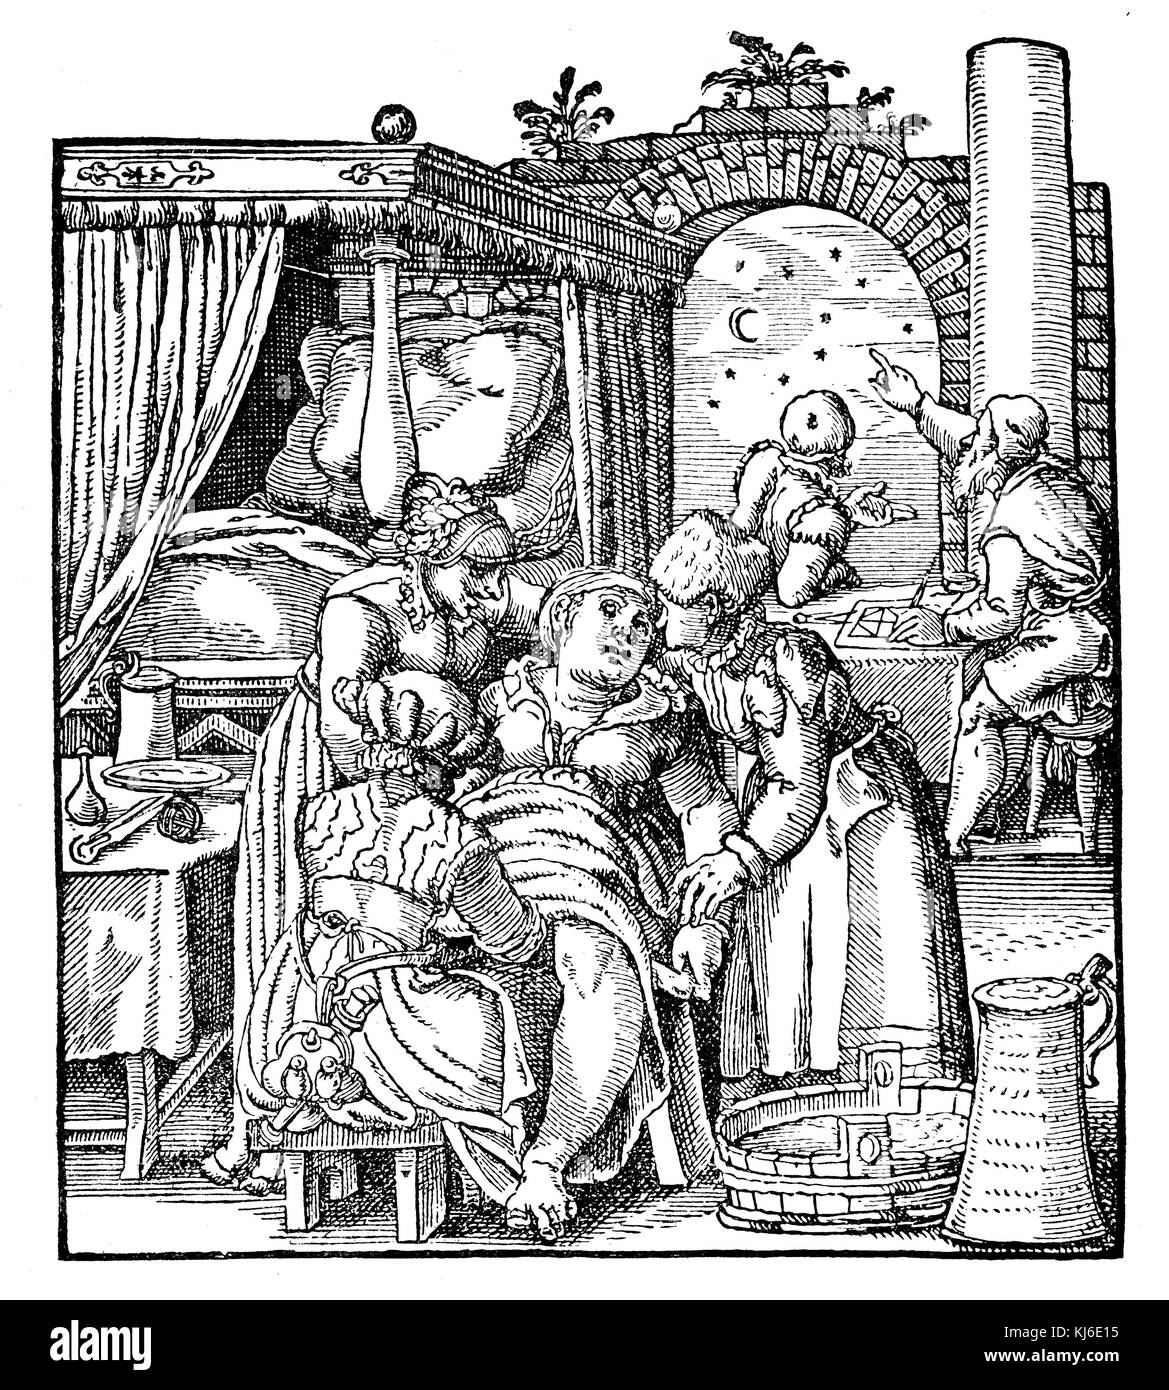 Matrona alemán del siglo XVI al nacimiento de jacob rueff (deutsche hebamme des 16 jahrhunderts bei der geburt. aus jacob rueff) Foto de stock